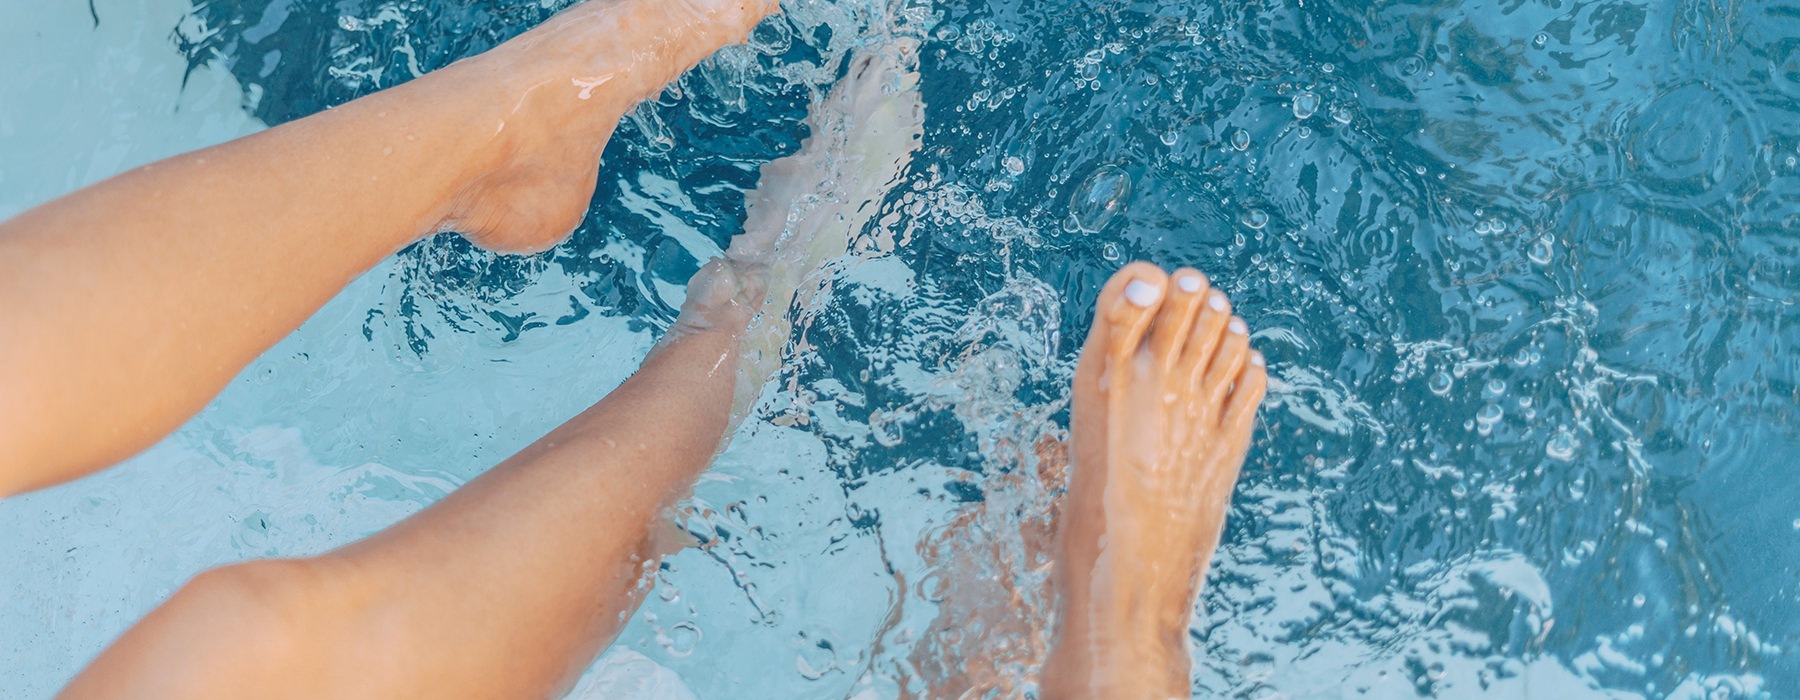 Two People's Legs In Pool